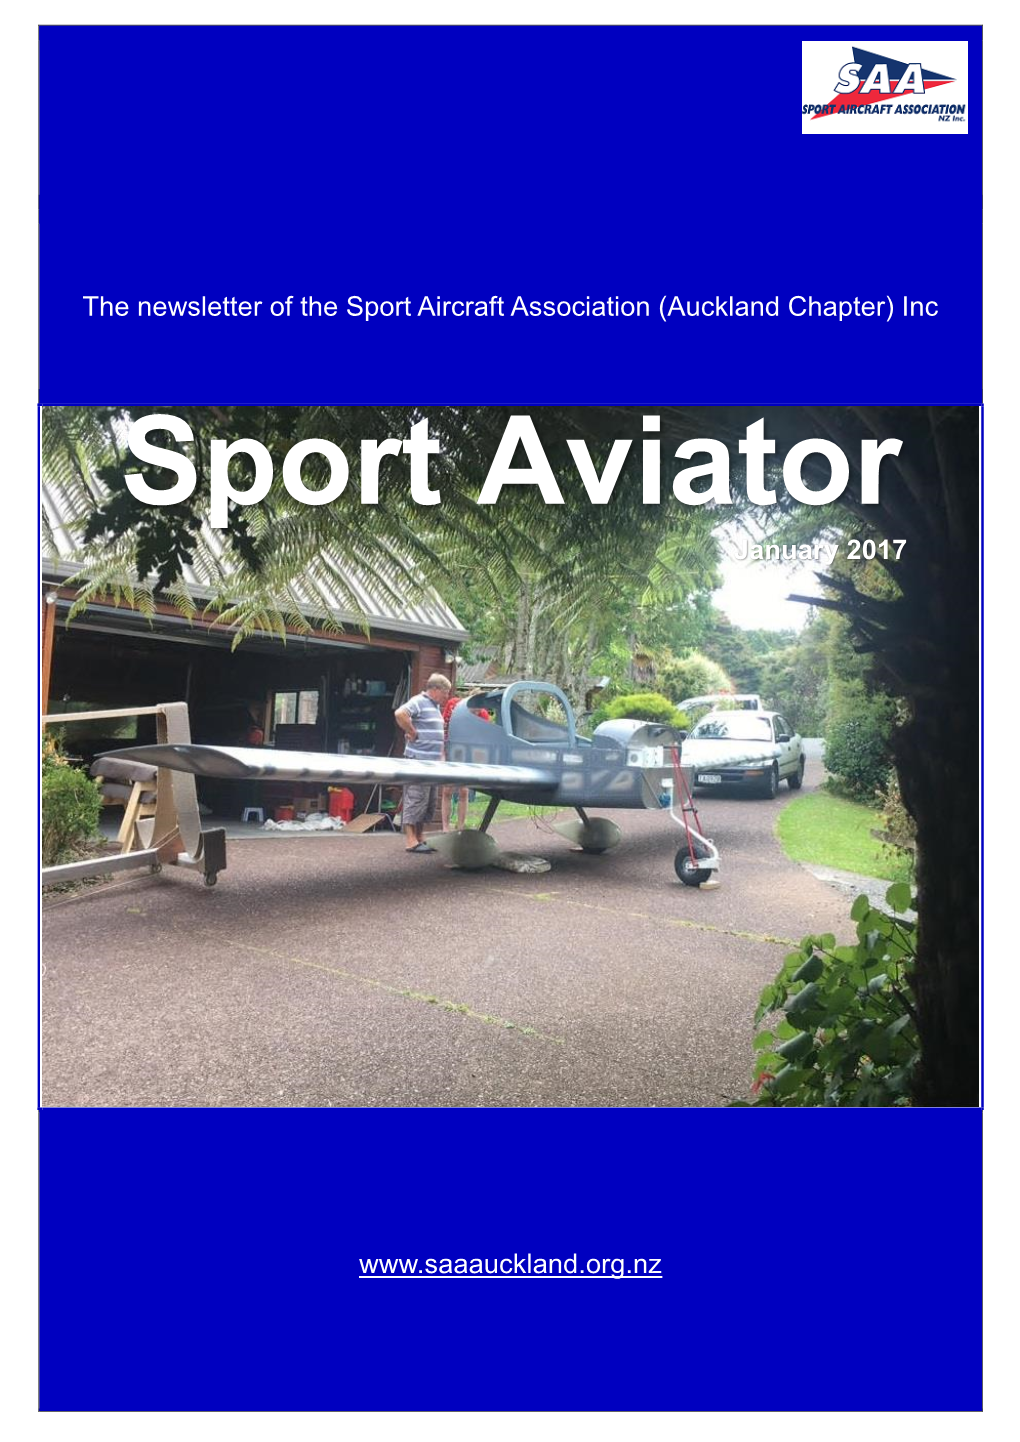 Newsletter of the Sport Aviation Association (Auckland Chapter)